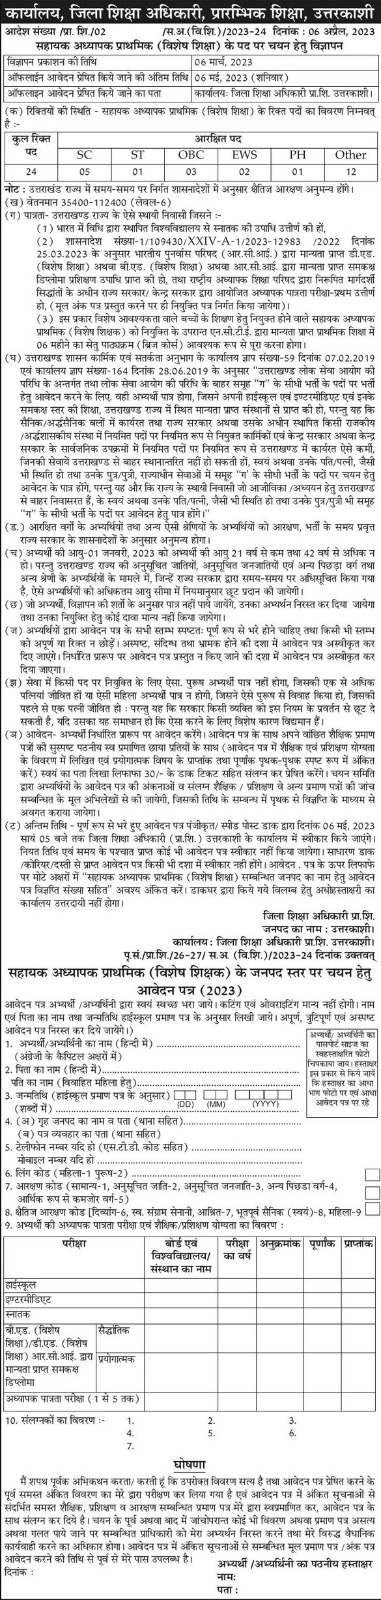 Teachers Recruitment in Uttarkashi